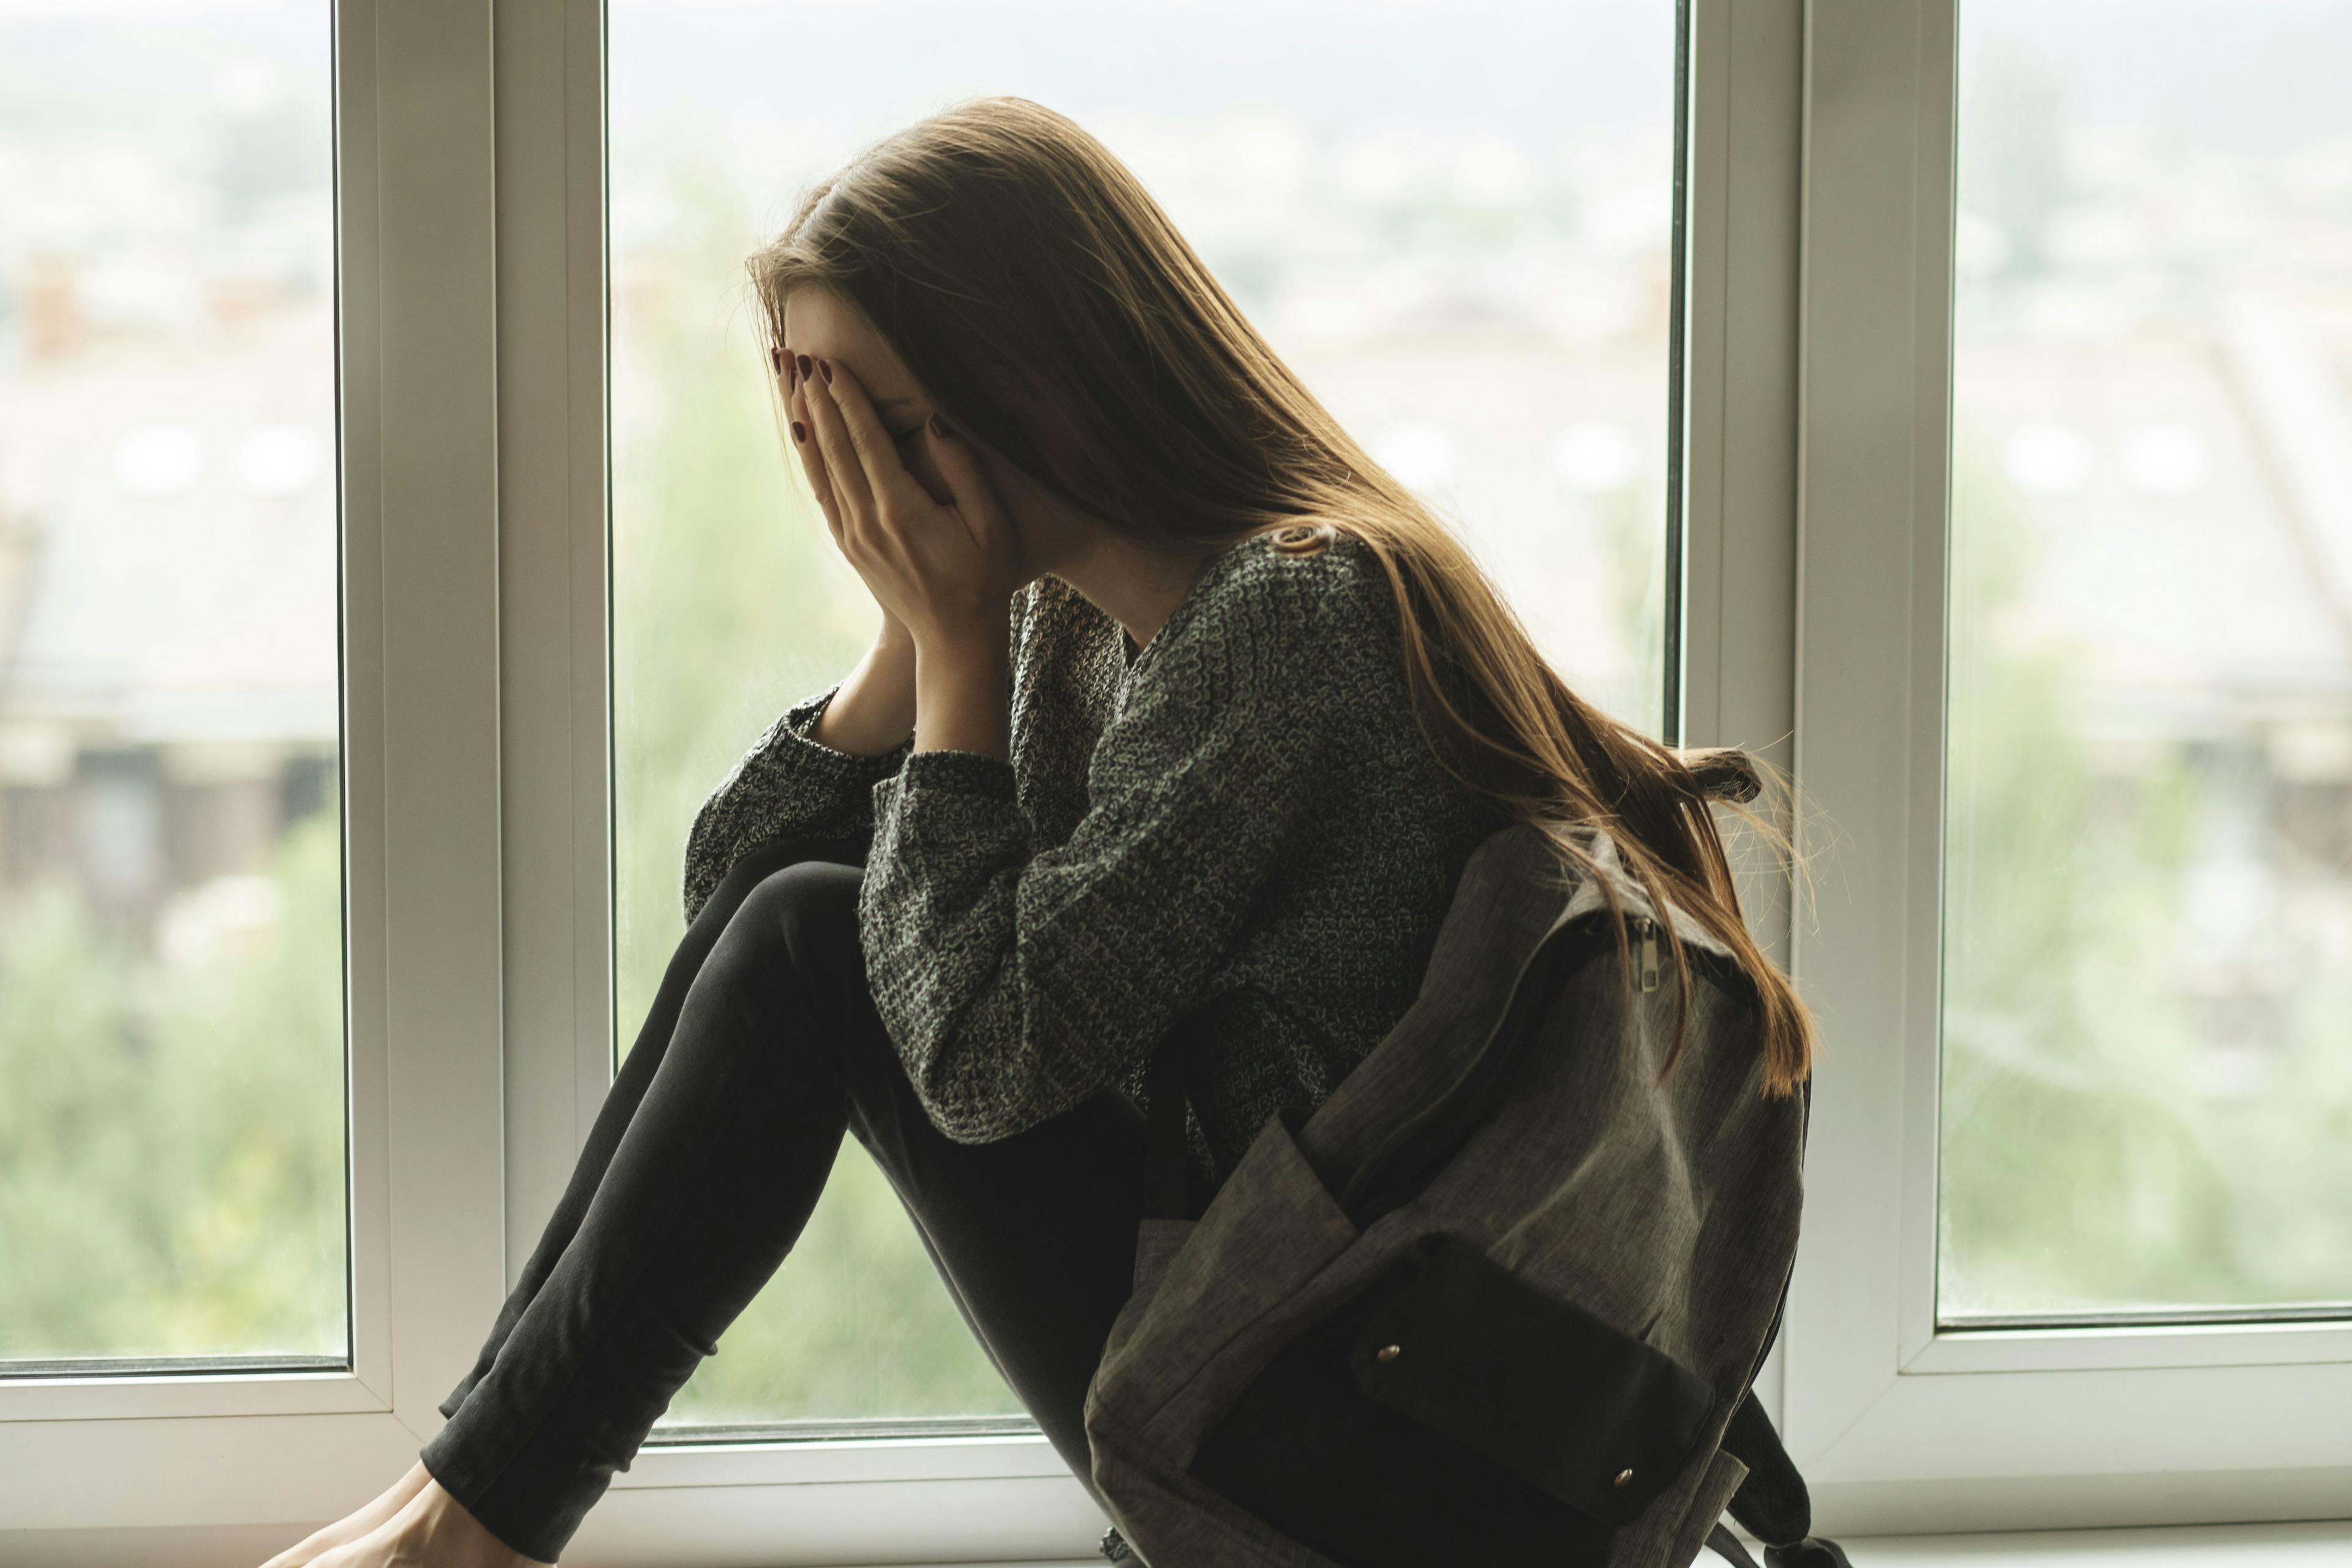 More girls seek treatment for mental health reasons than boys